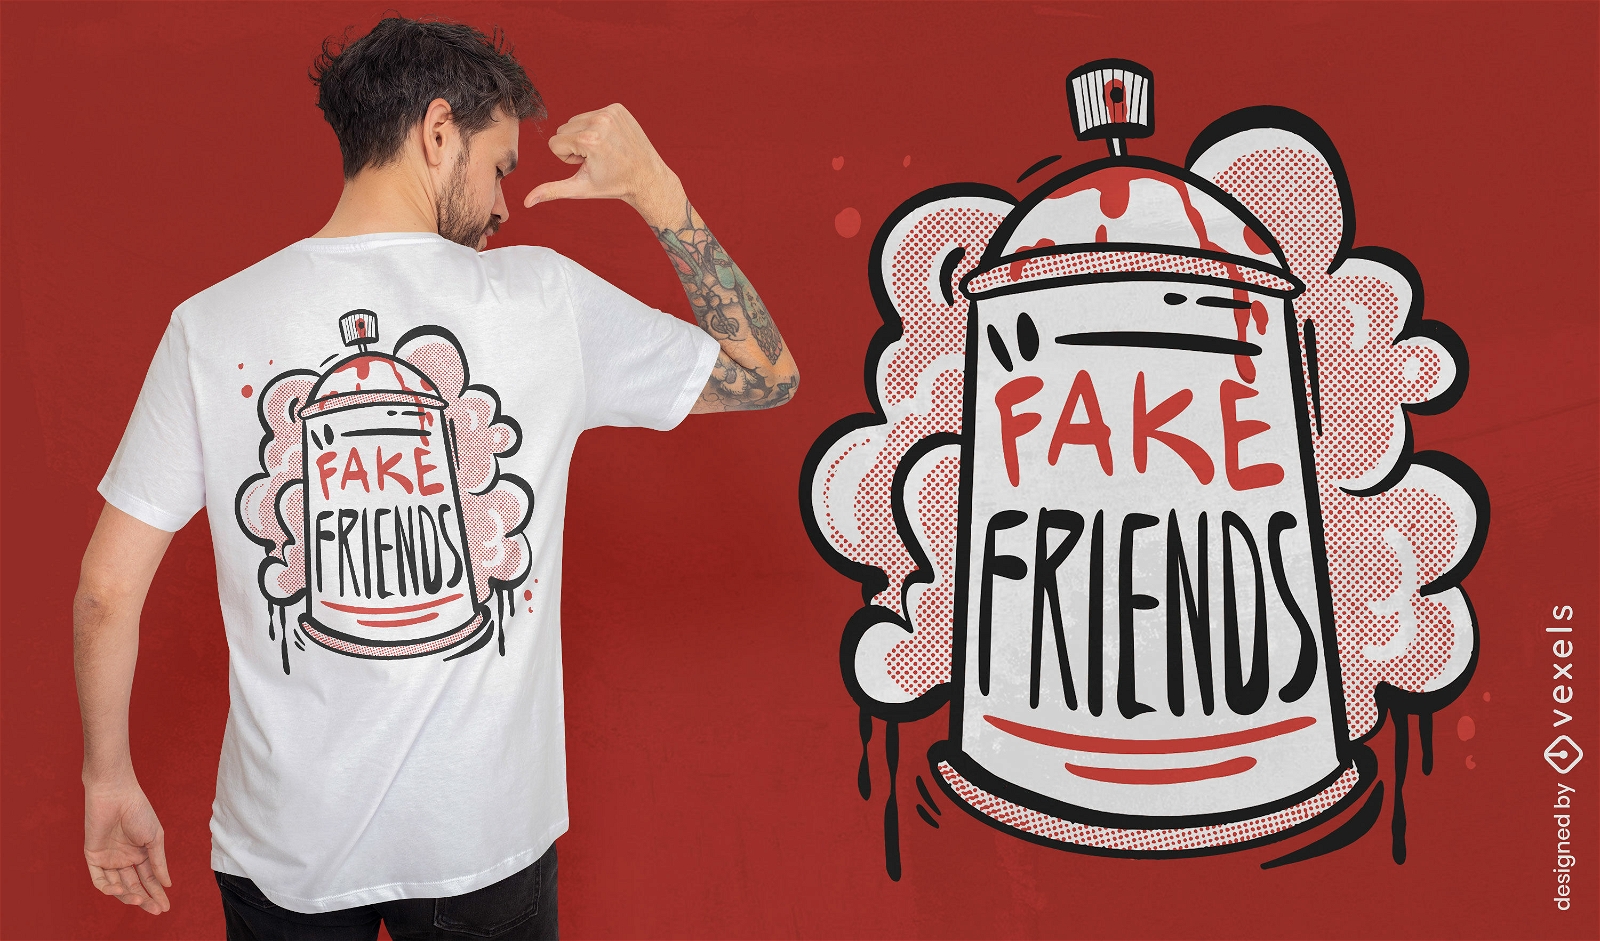 Fake friends spray can t-shirt design